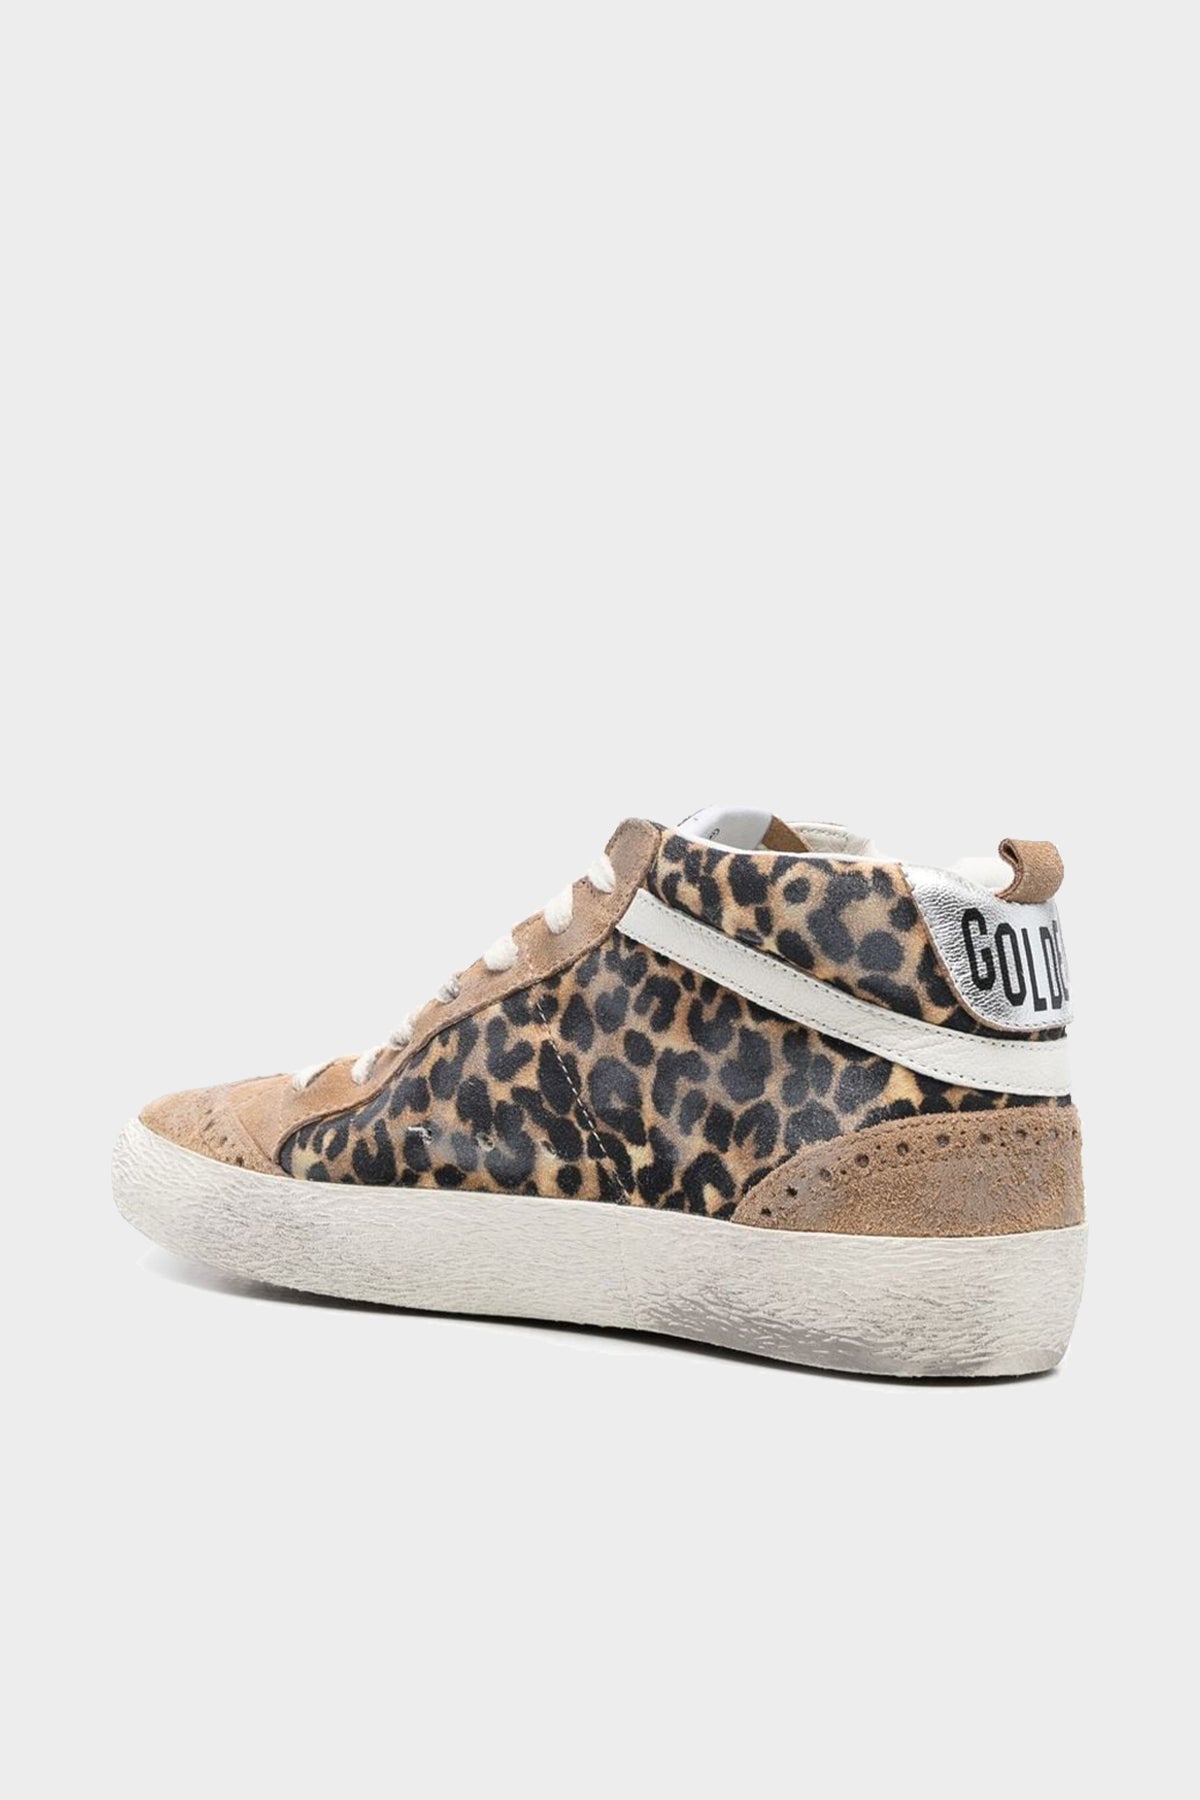 Mid-Star Leopard Suede Leather Sneaker - shop-olivia.com